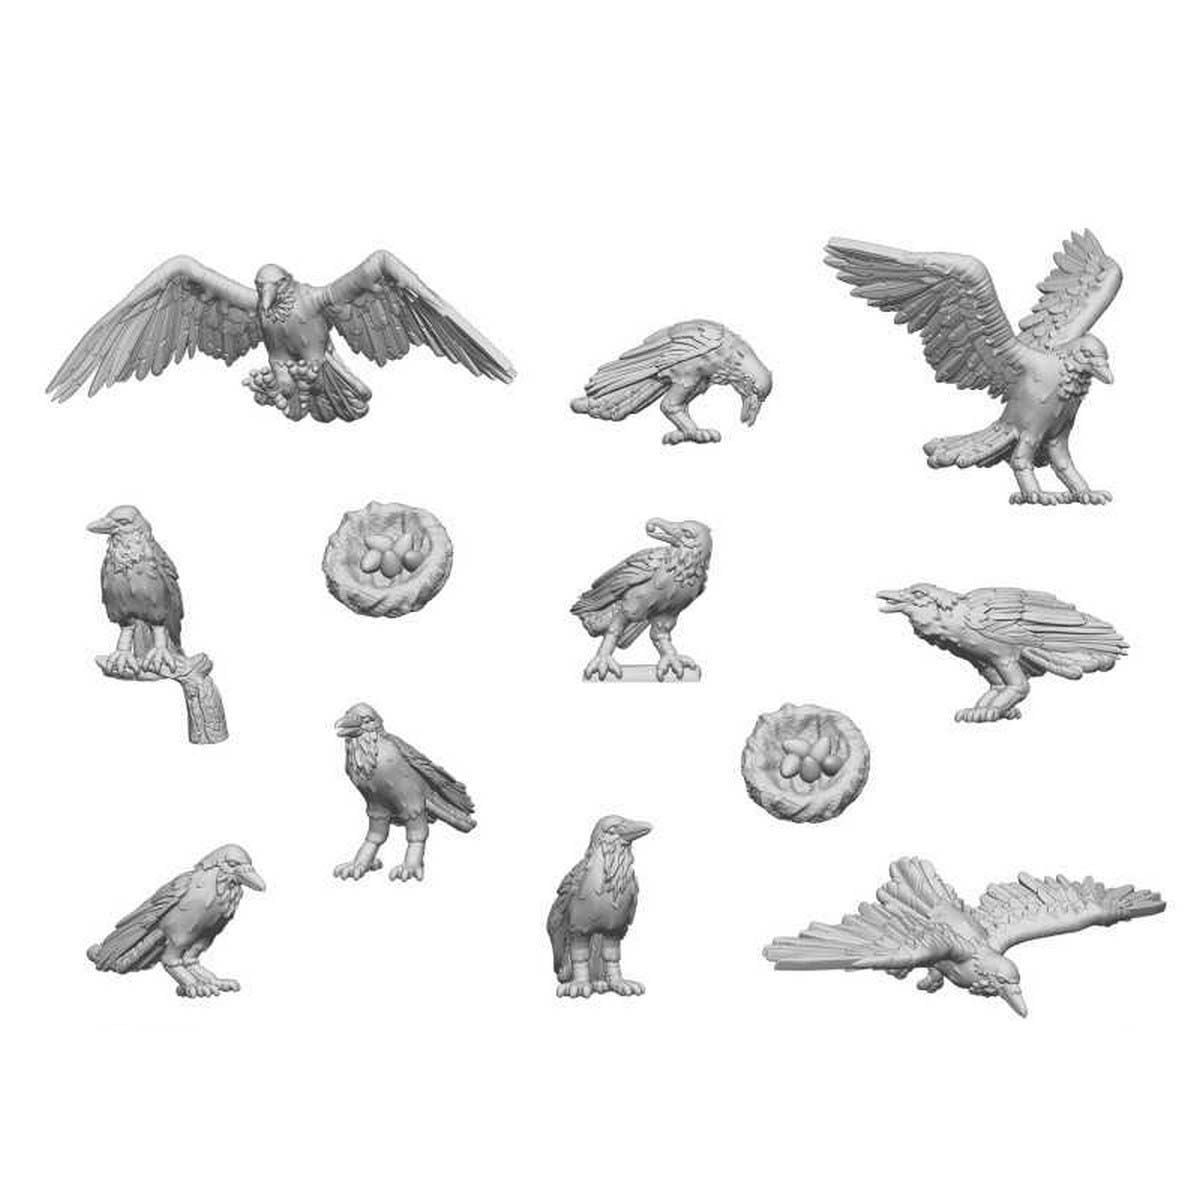 3D Printed Set - Ravens